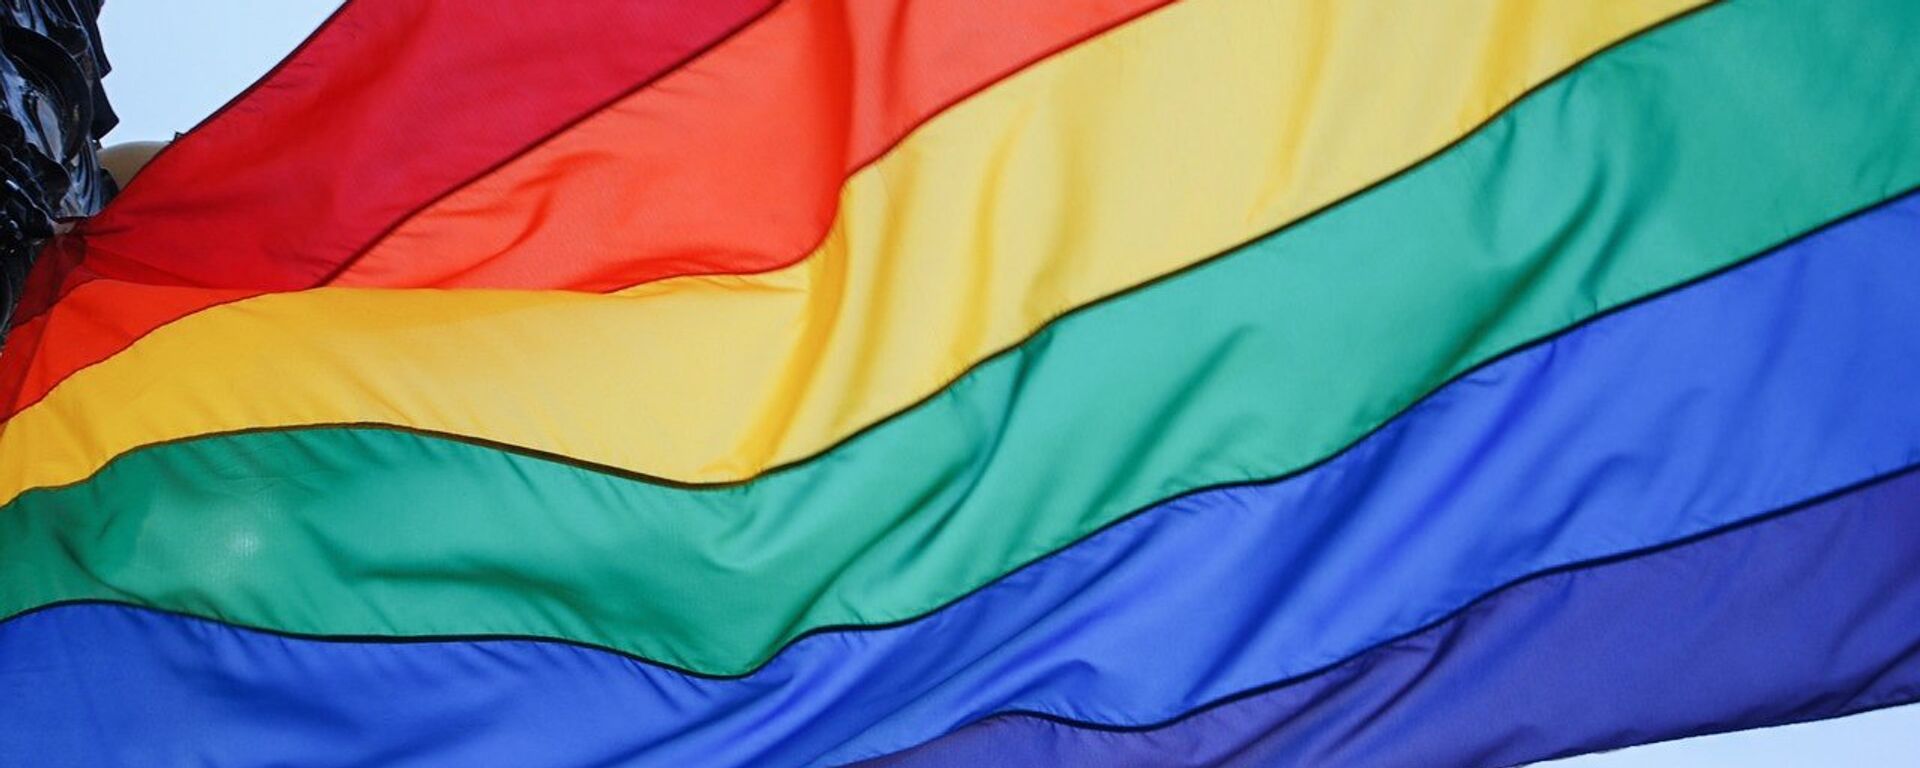 Bandera arcoíris, símbolo del movimiento LGBT - Sputnik Mundo, 1920, 04.09.2020